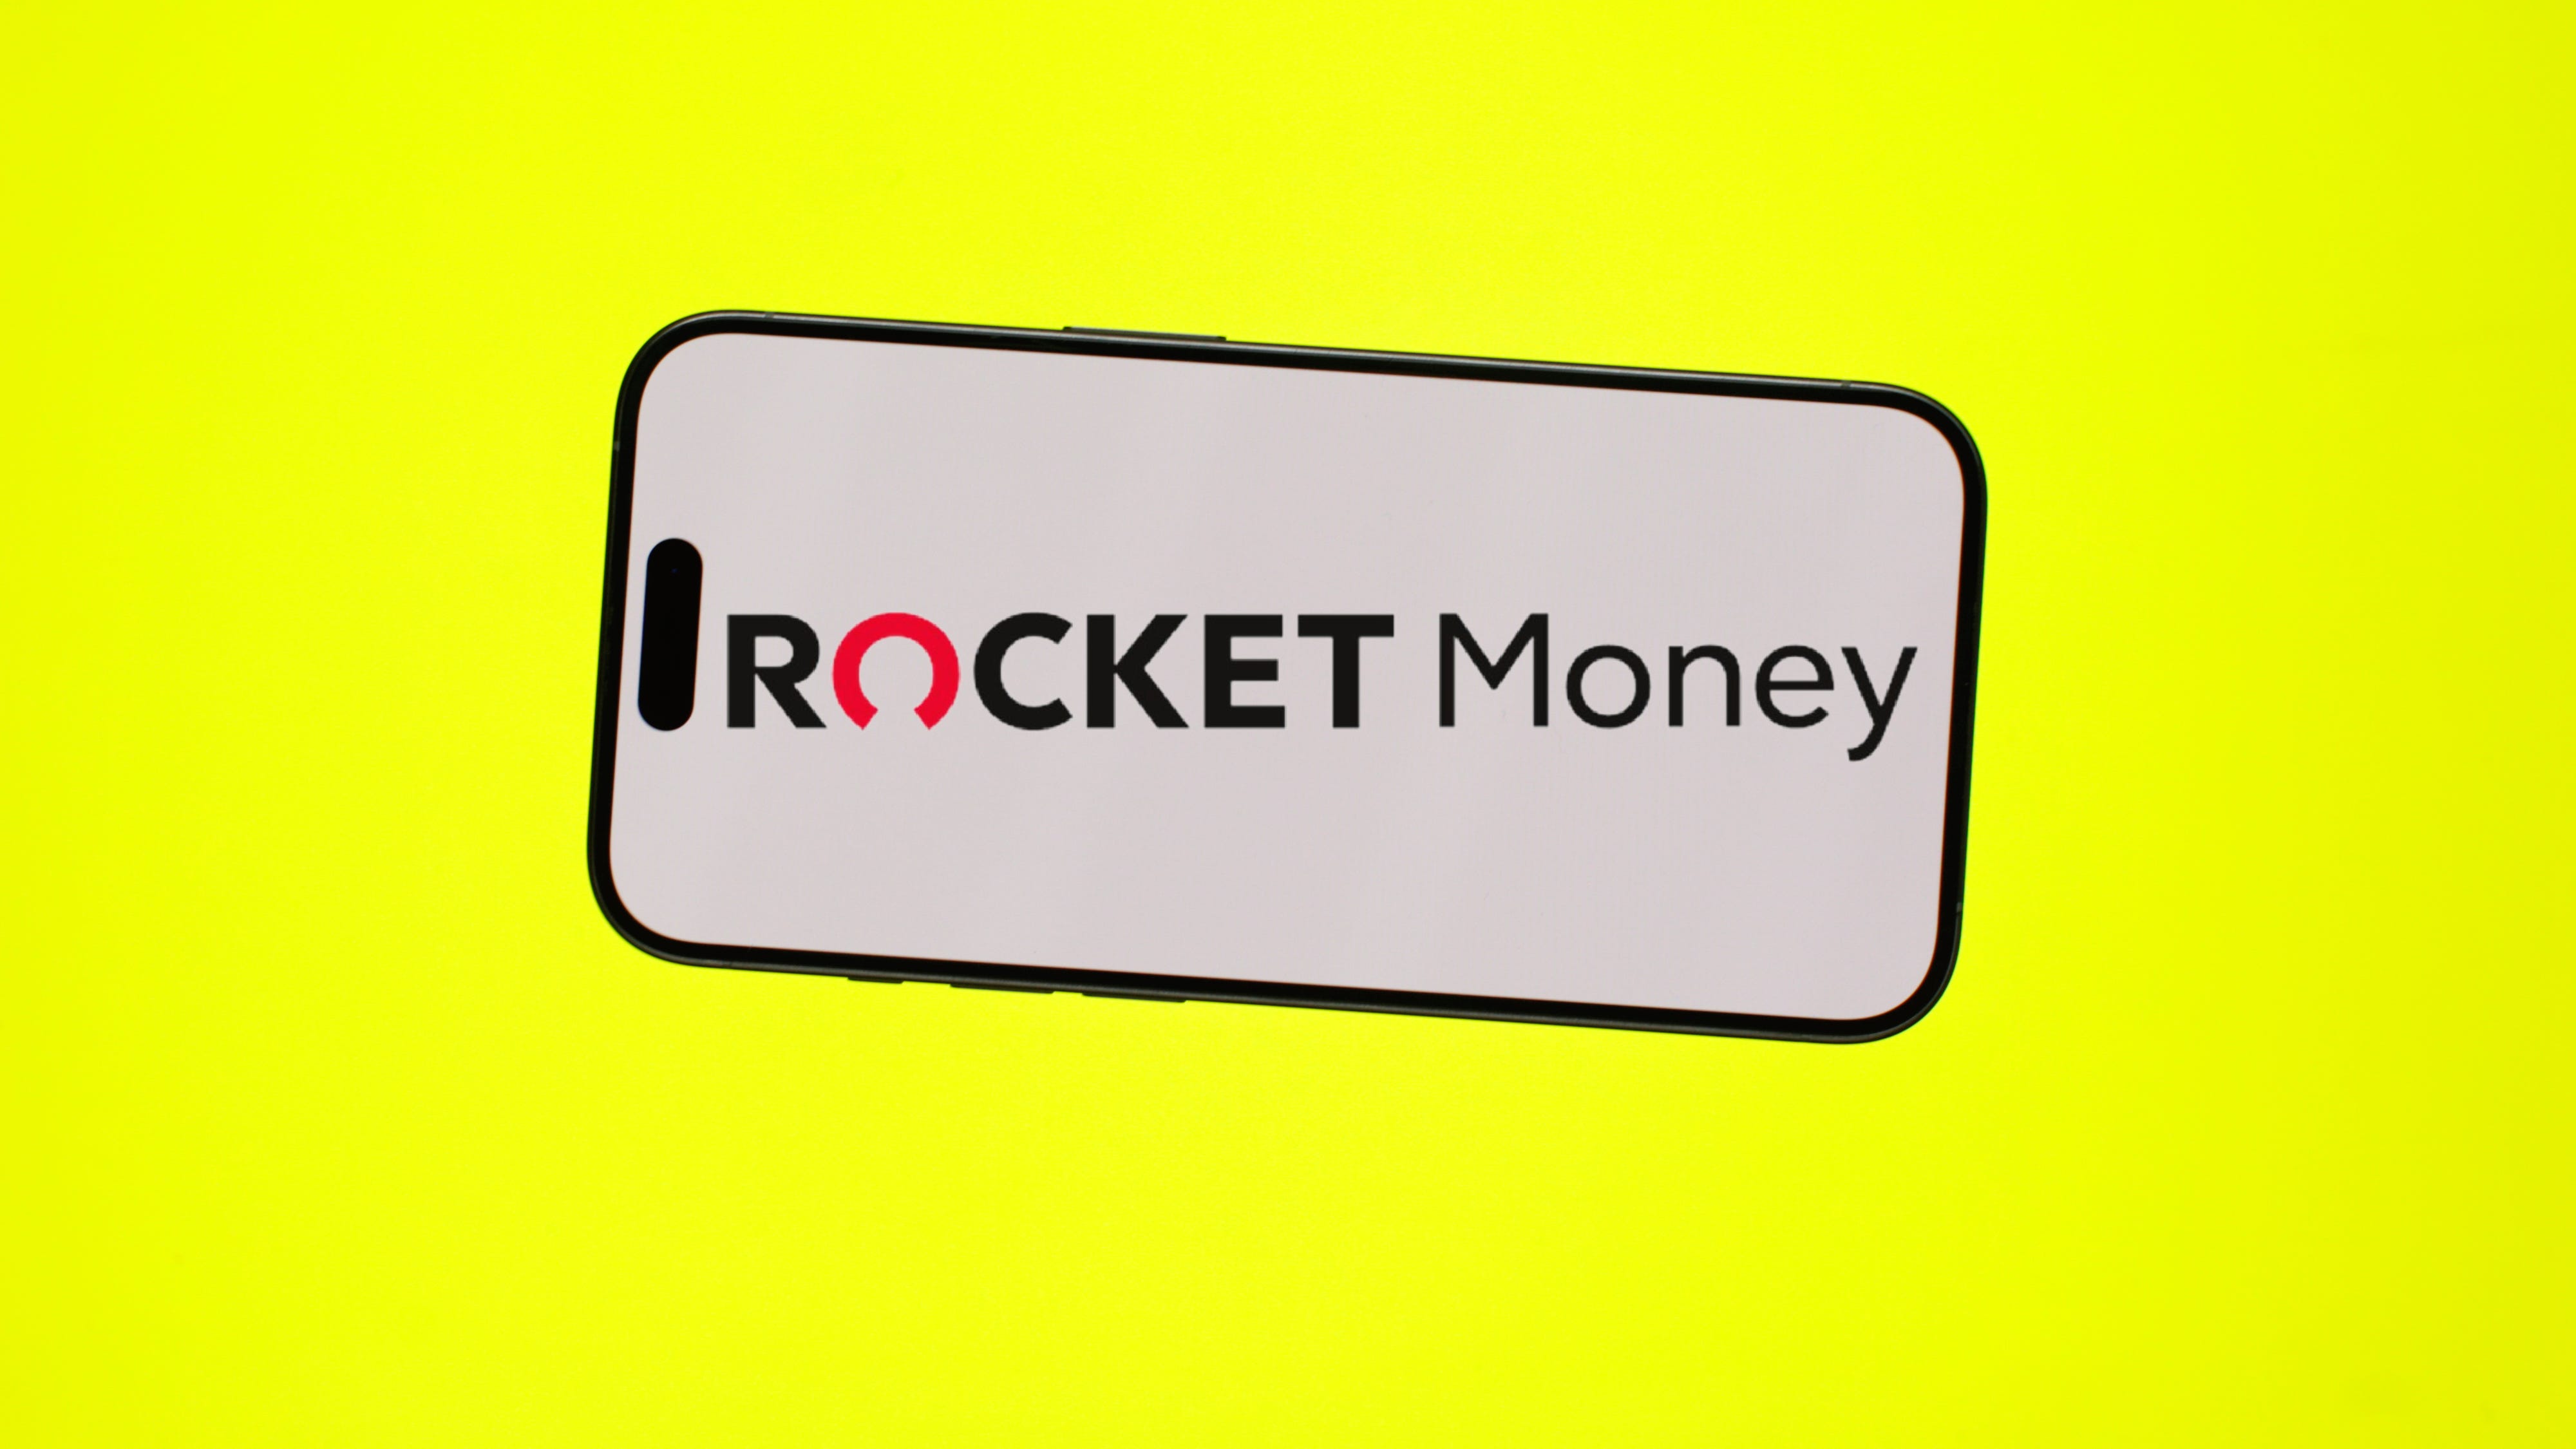 Rocket Money